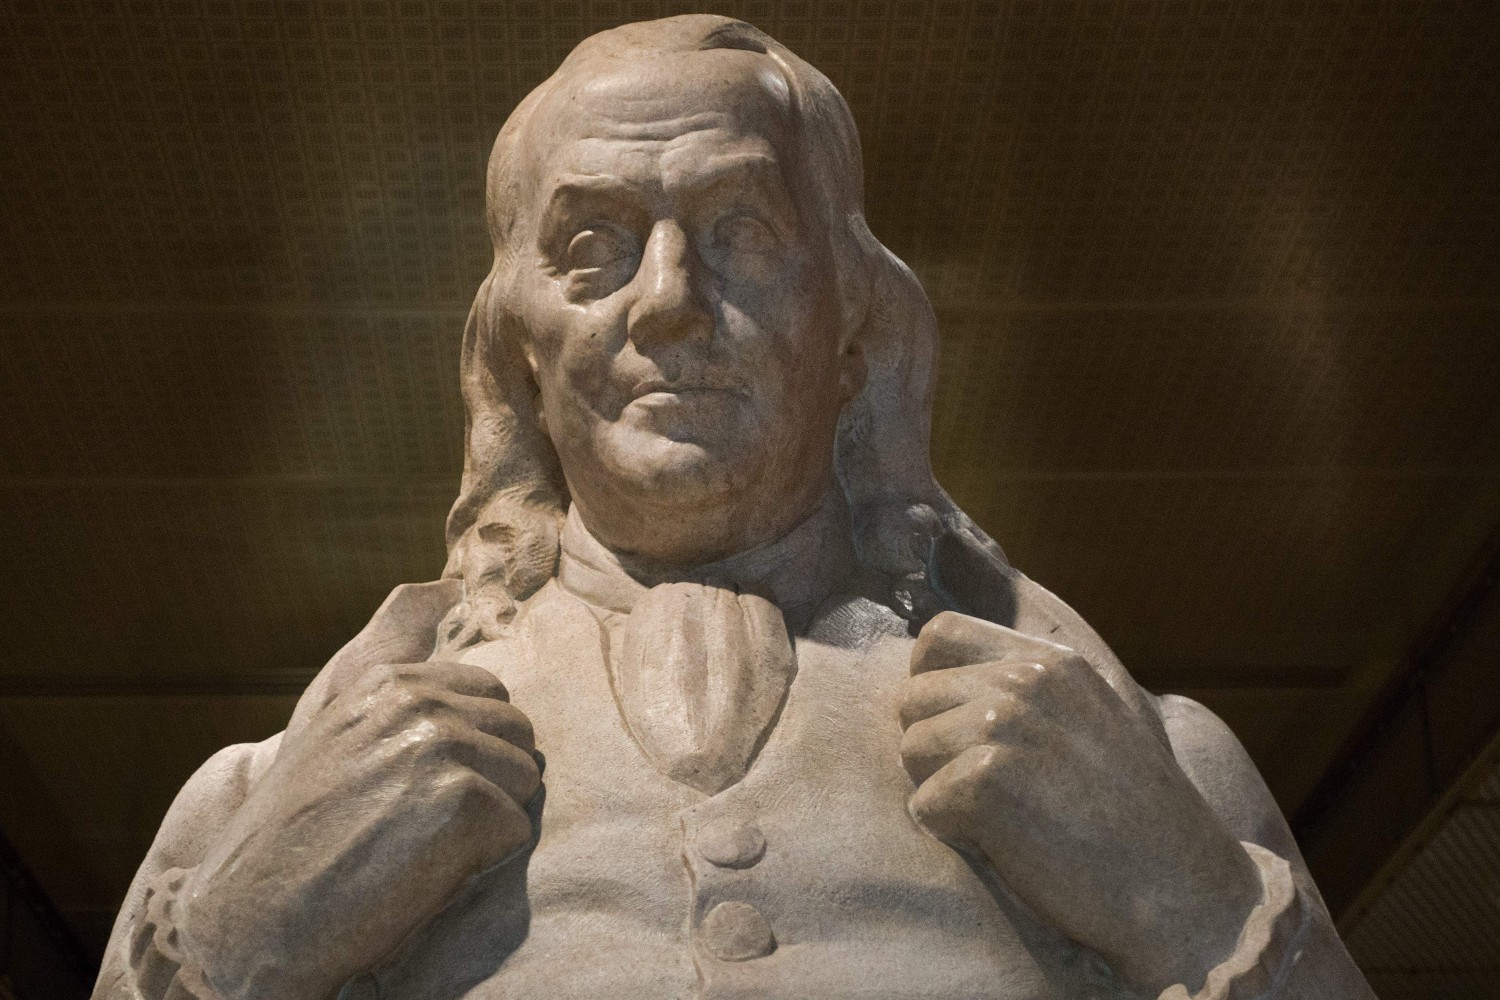 Benjamin Franklin statue